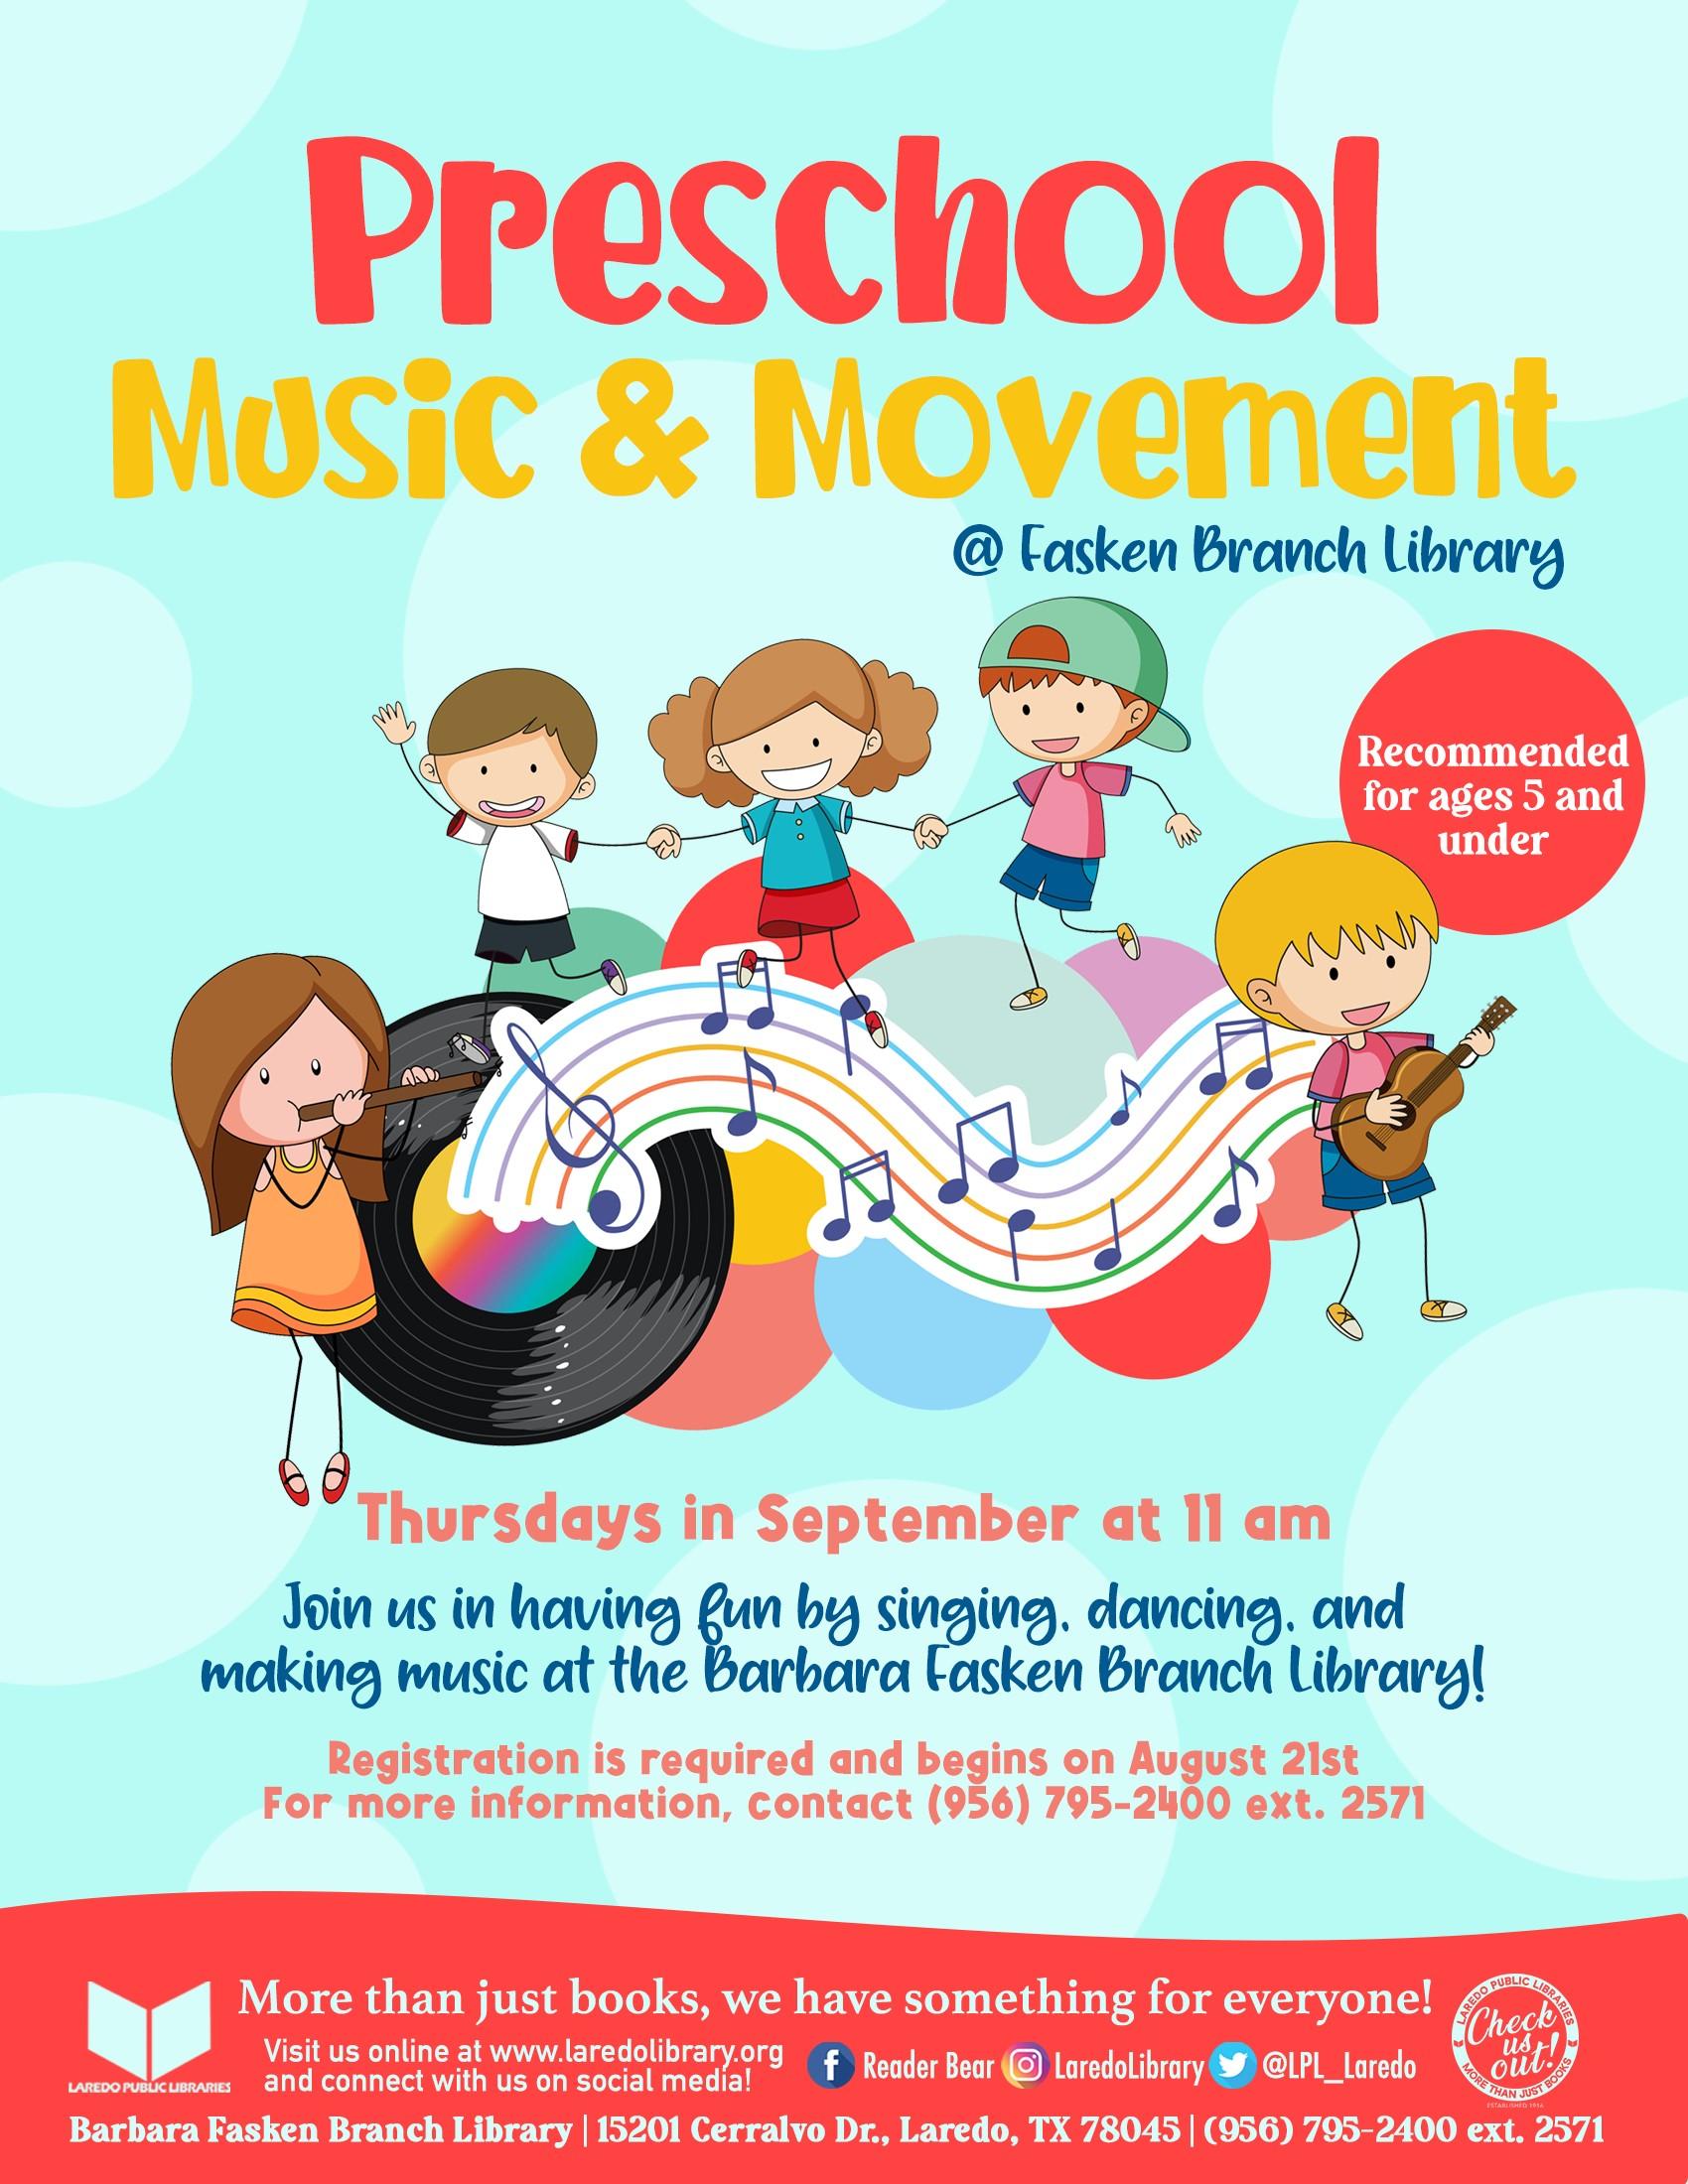 Preschool Music & Movement Registration Begins!